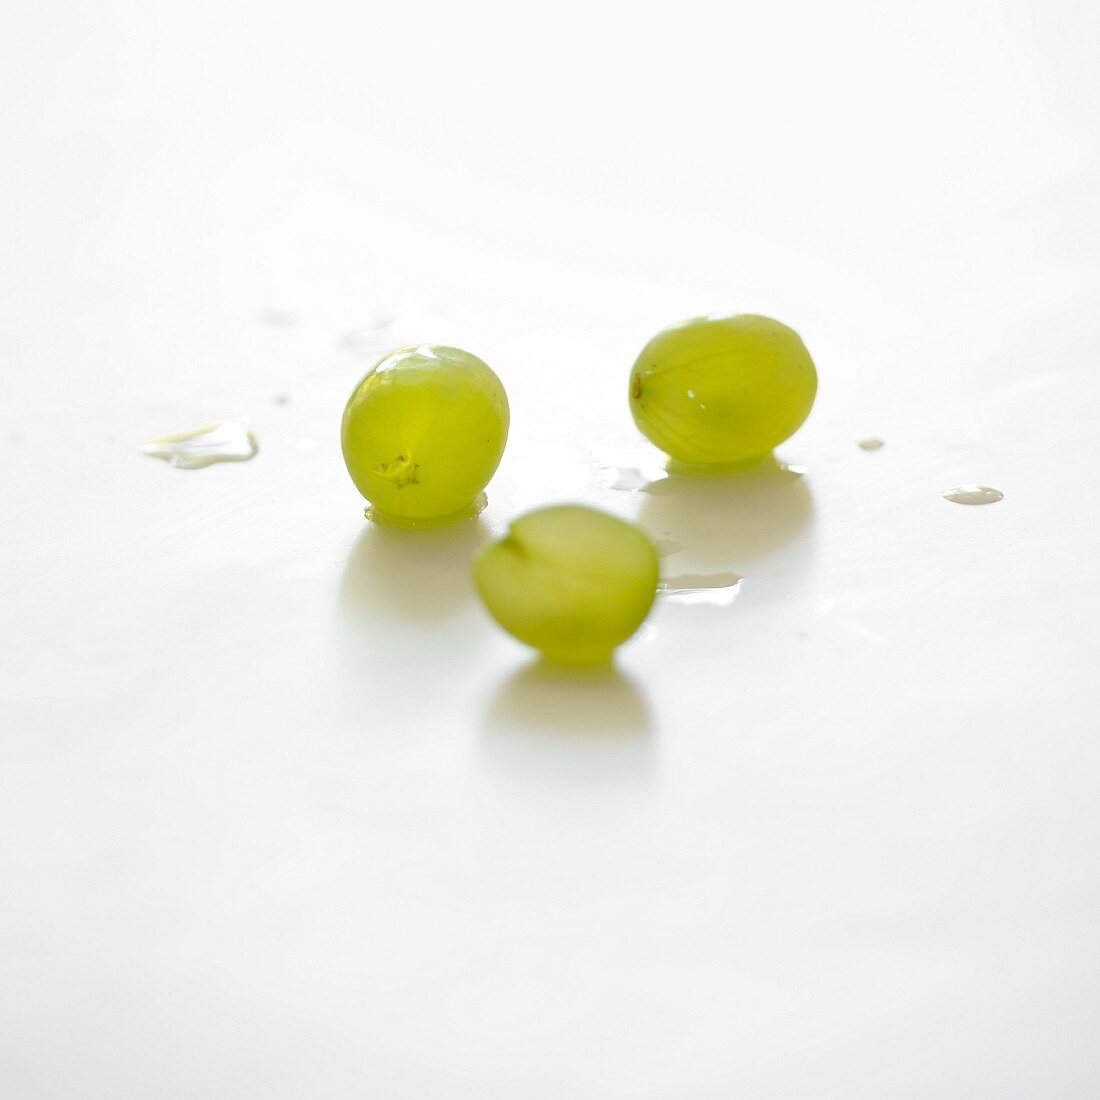 Three white grapes on a white background